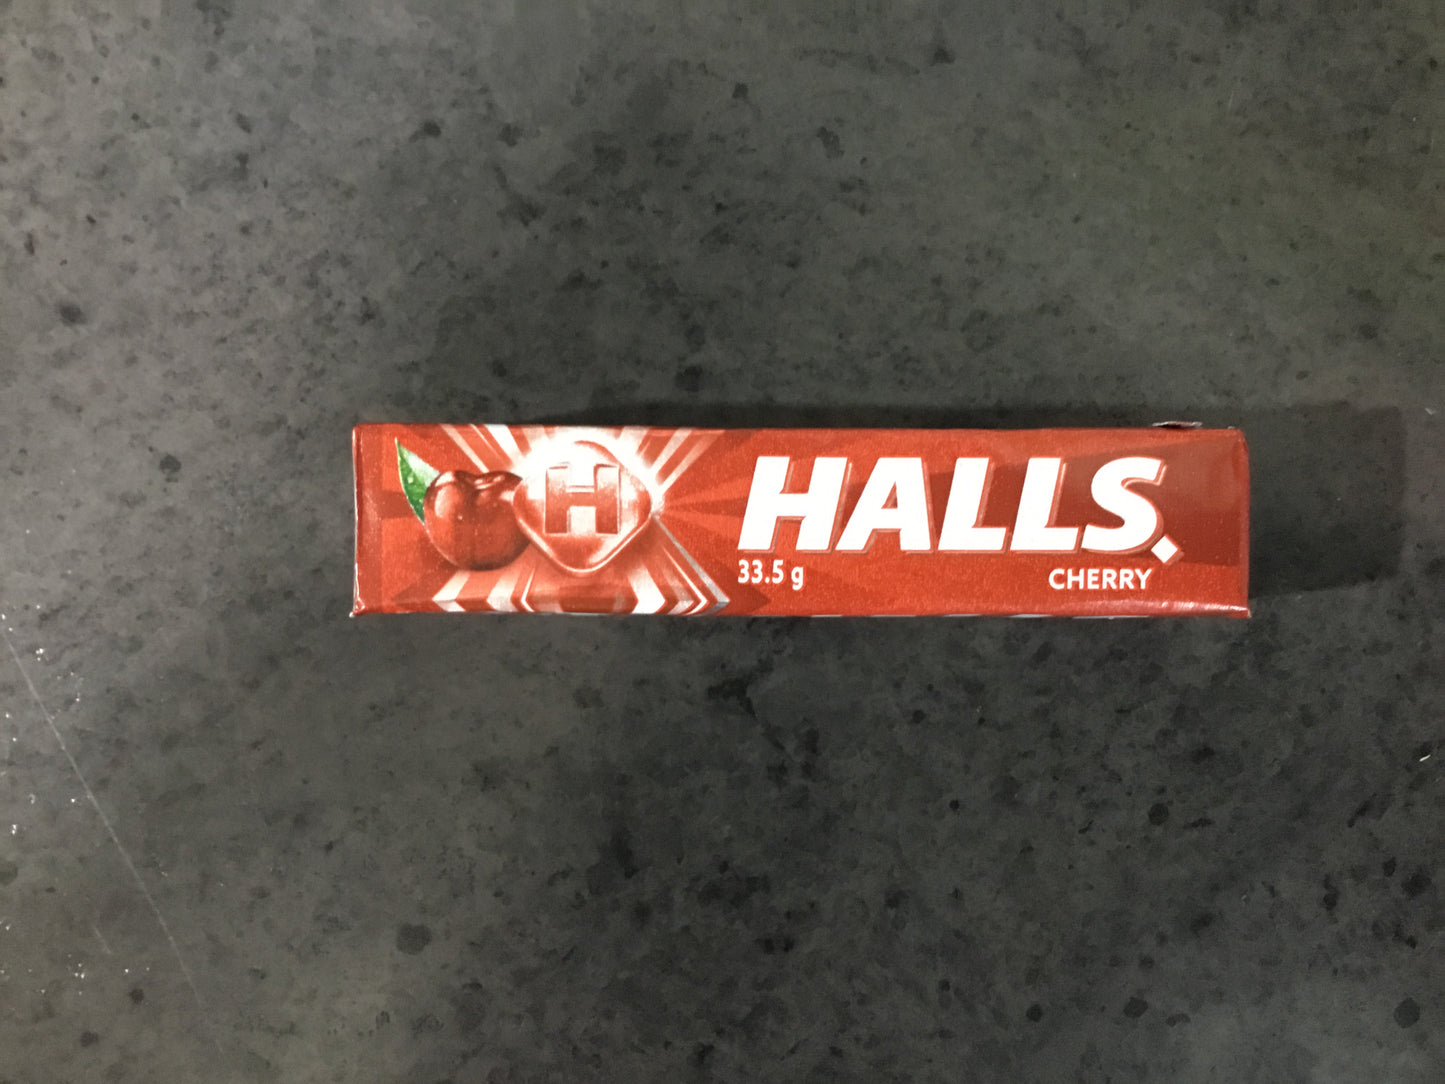 Halls Cherry 33.5g